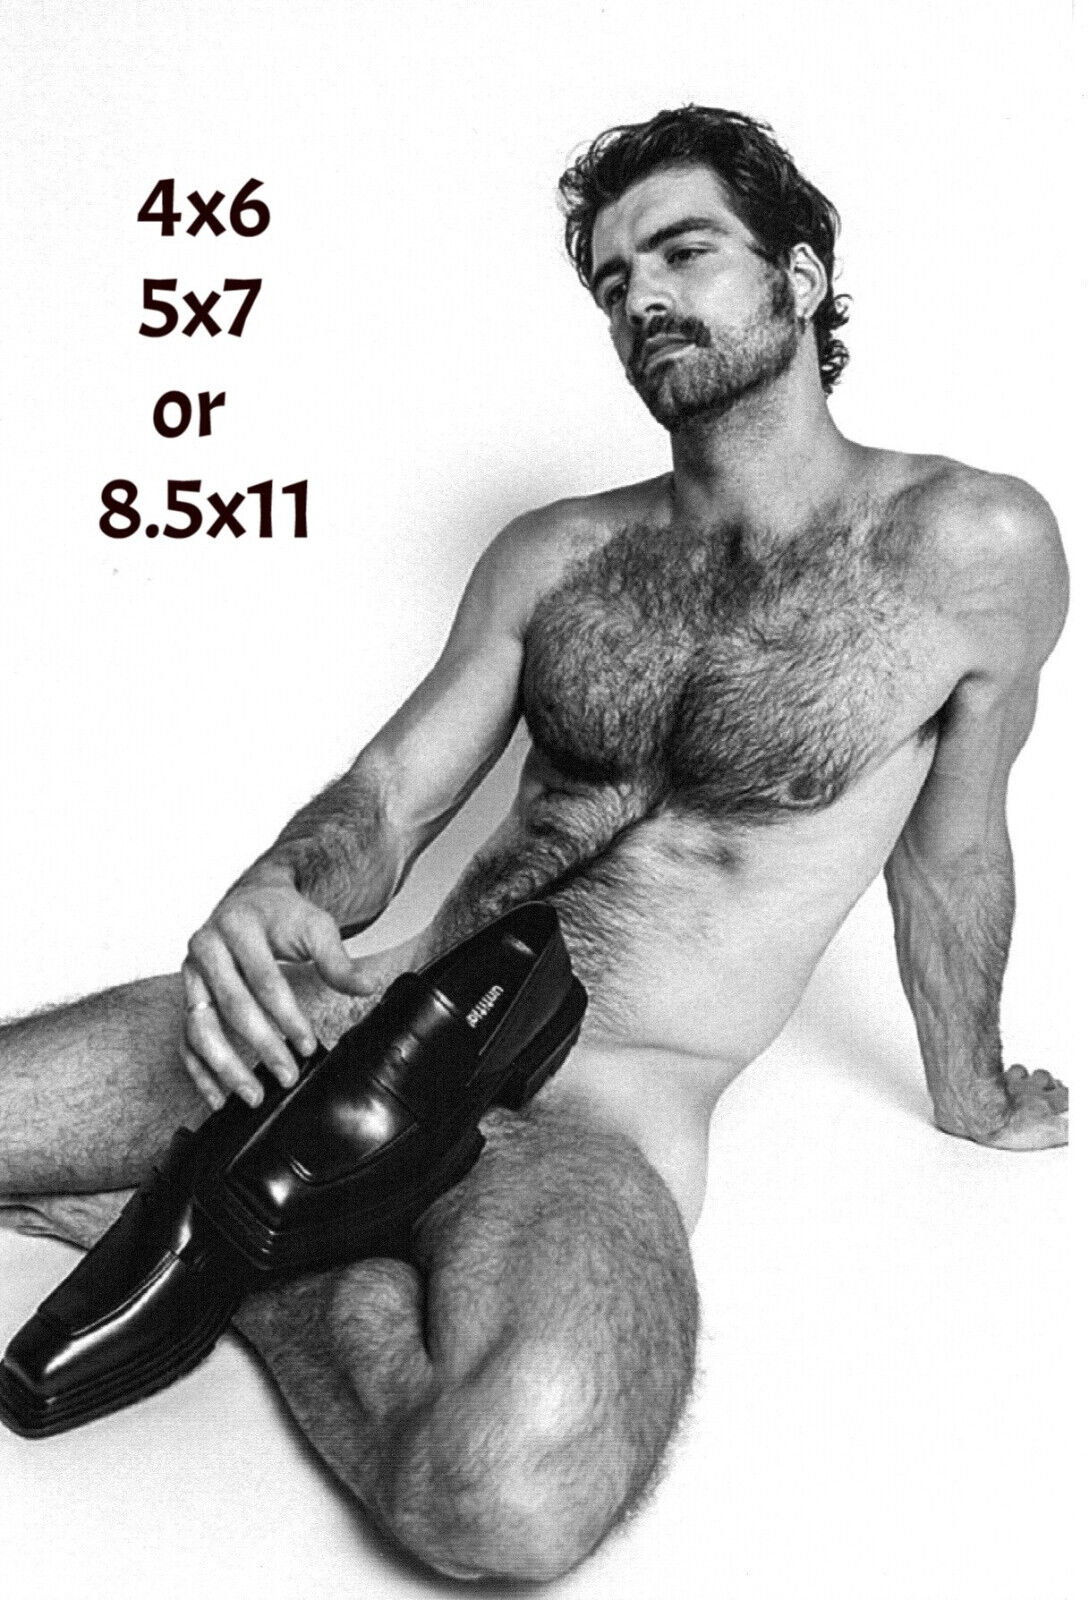 Handsome Muscular Male Bodybuilder Gay Interest B&W Photo Photograph Reprint #40